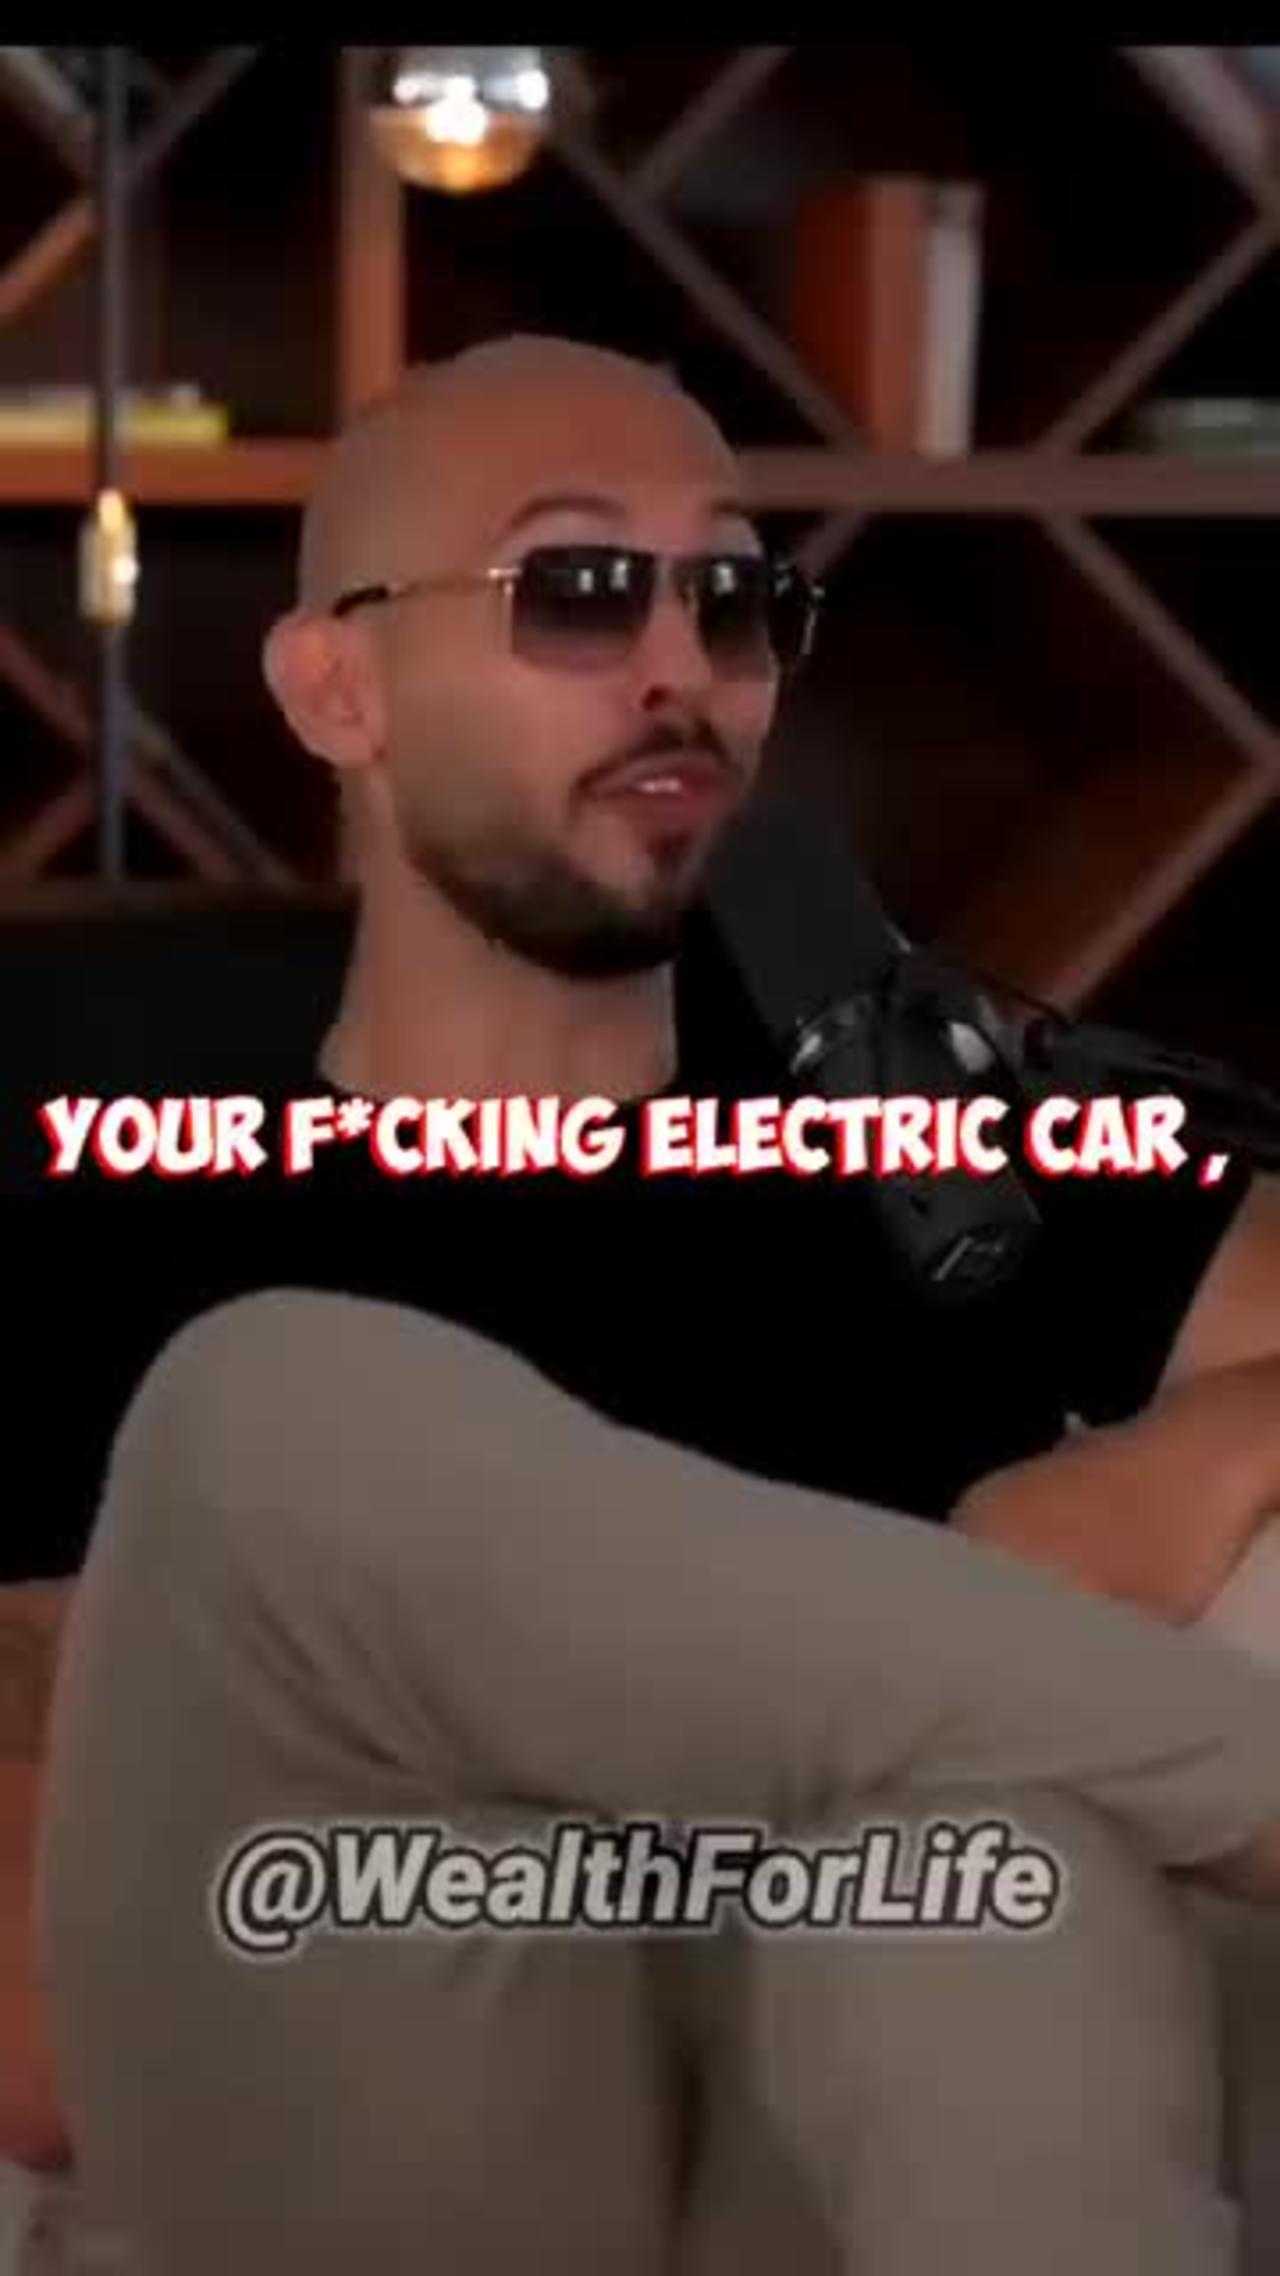 Tate explains why electric cars are a bad idea...